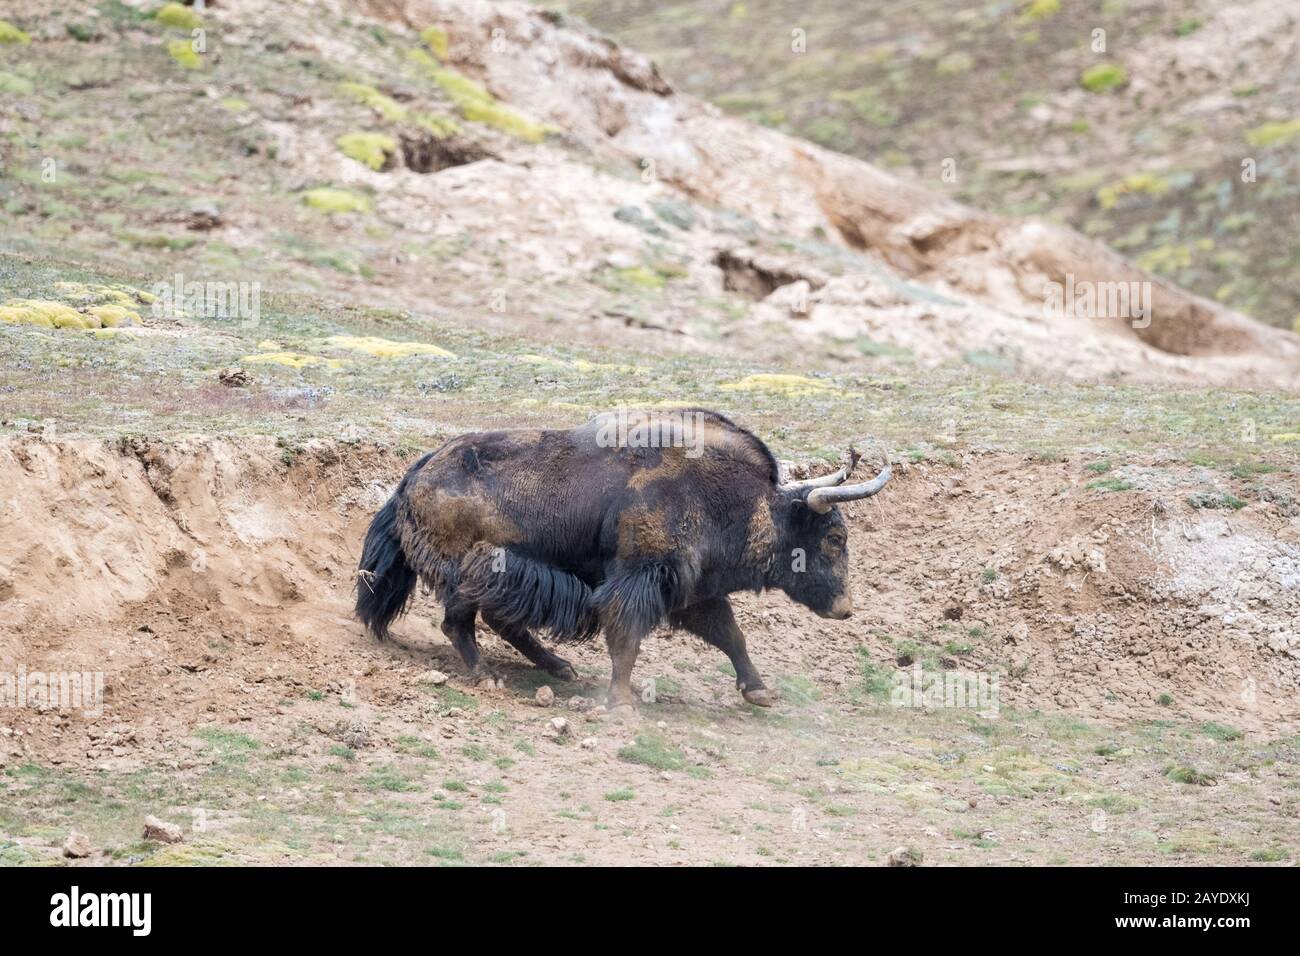 wild yak,bos mutus in mud bath Stock Photo